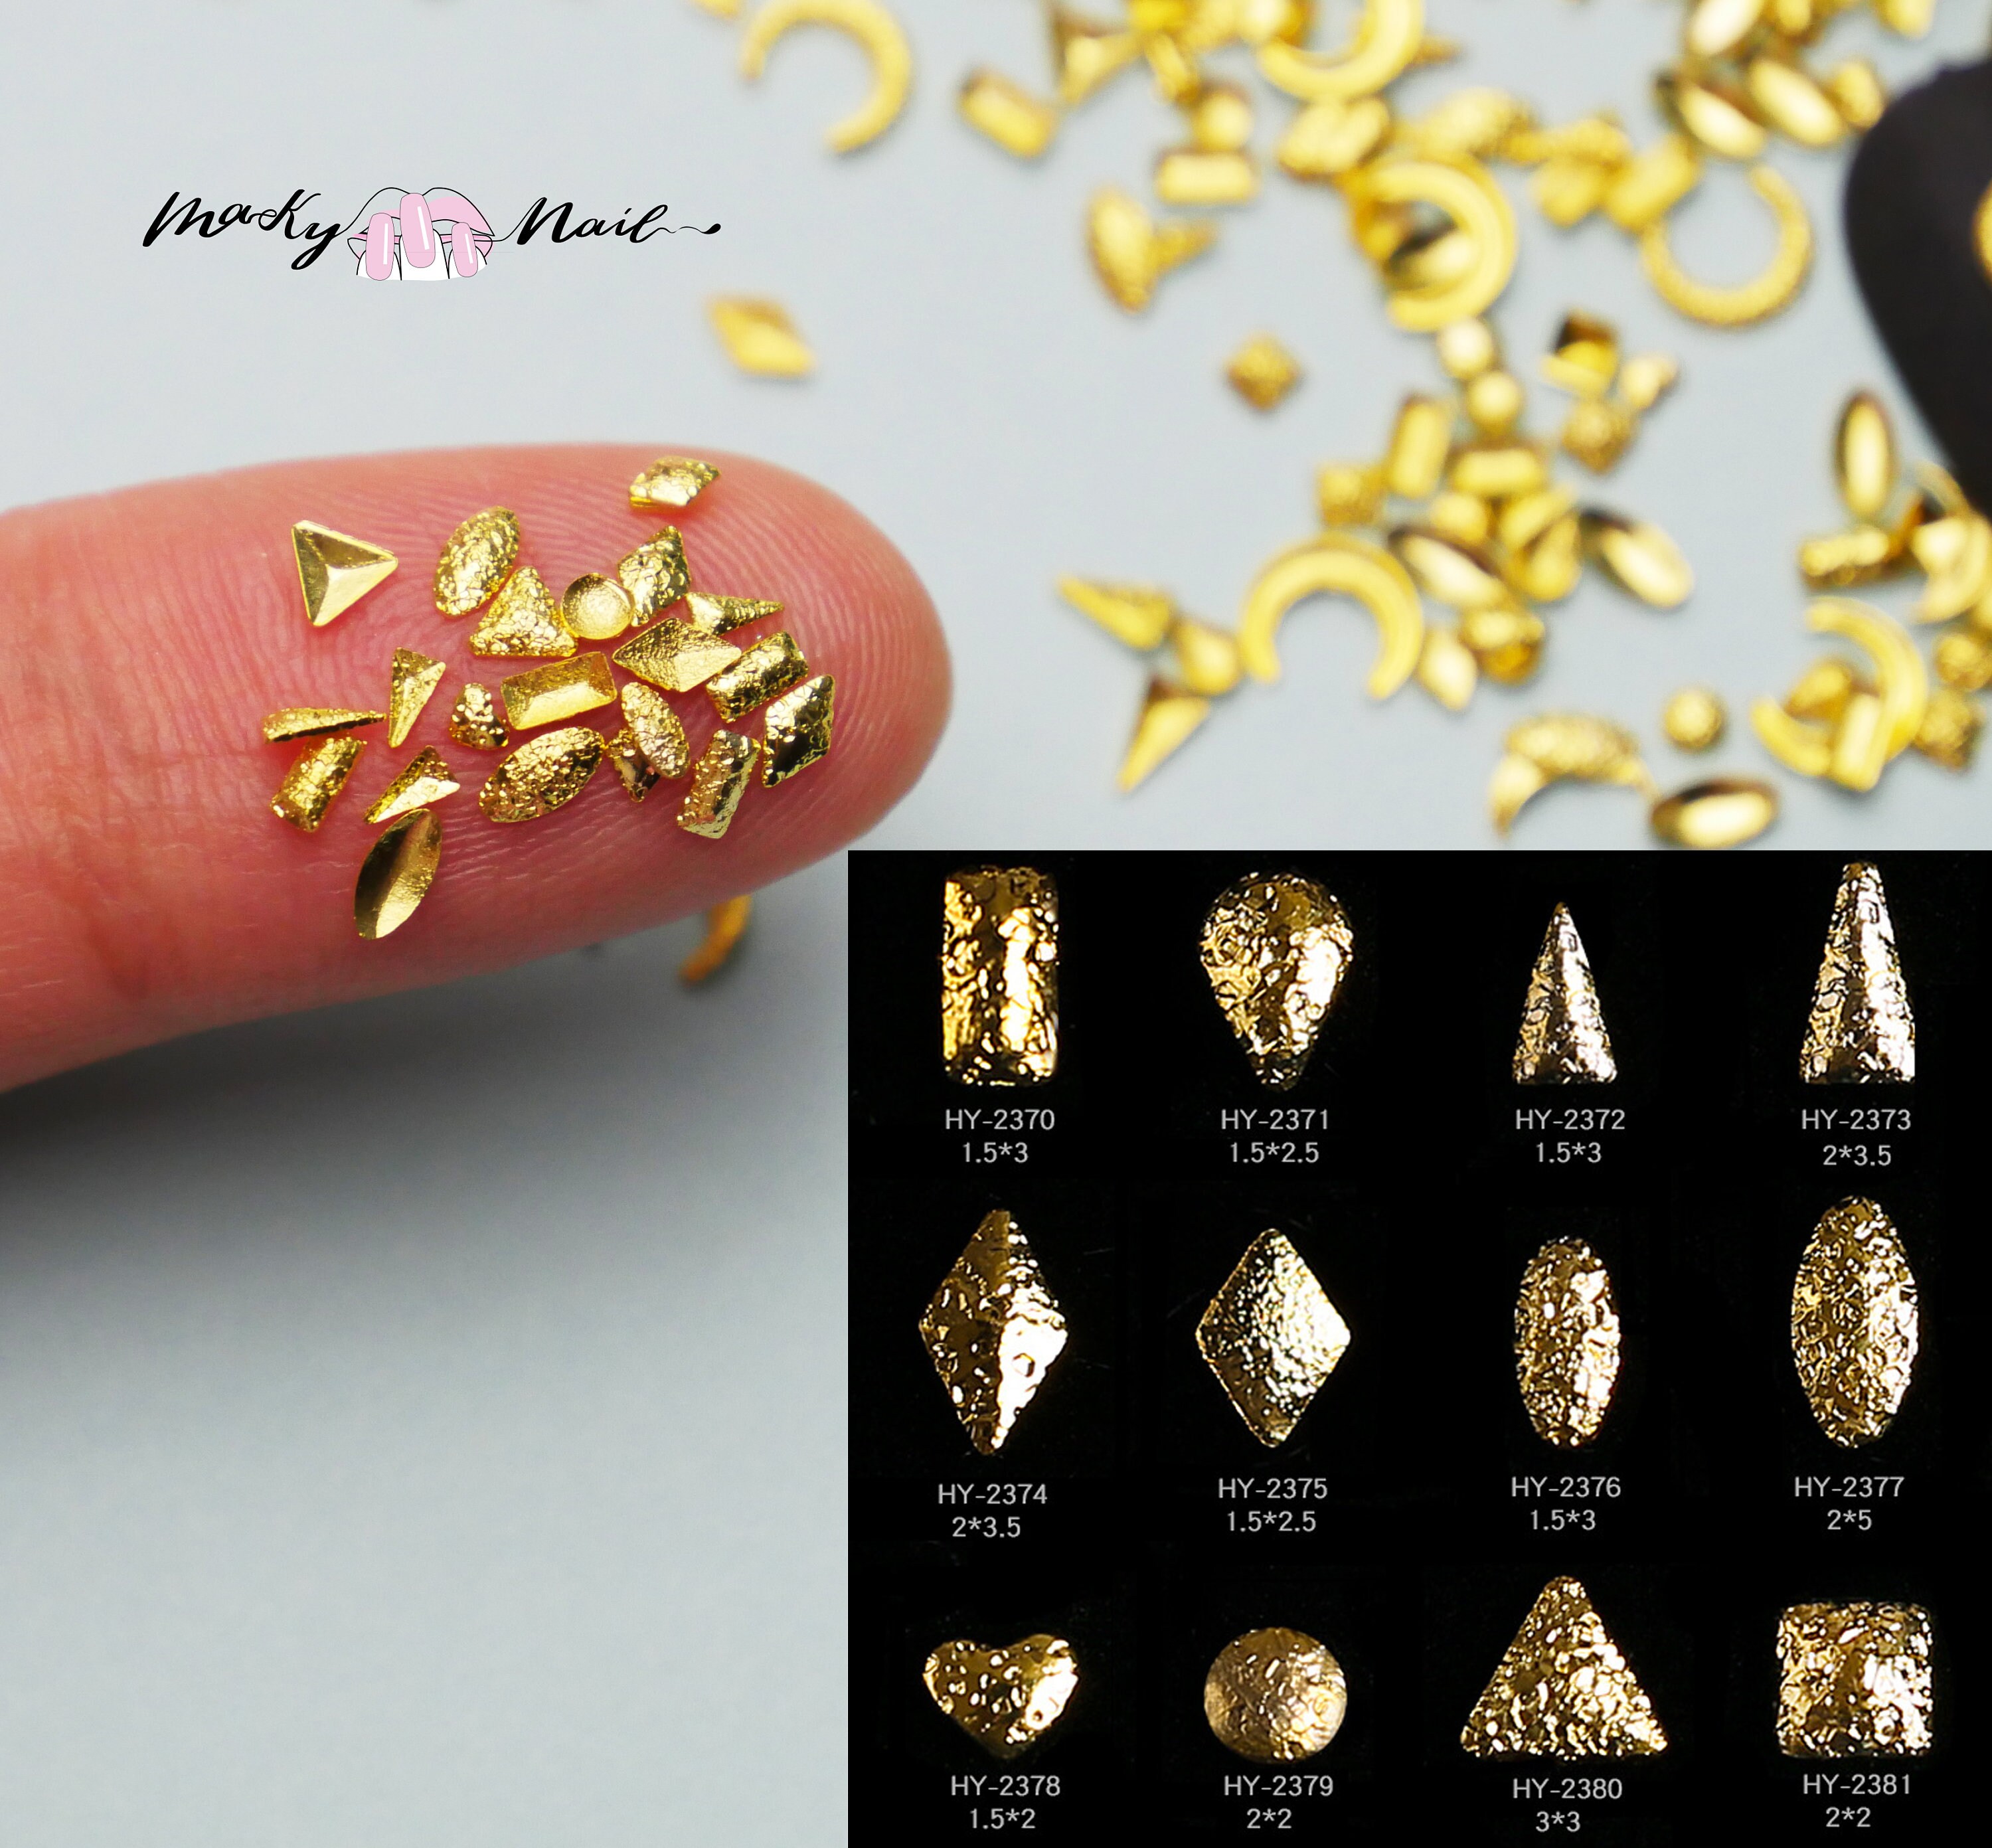 Jewelry Nail Charm WholeSale - Price List, Bulk Buy at